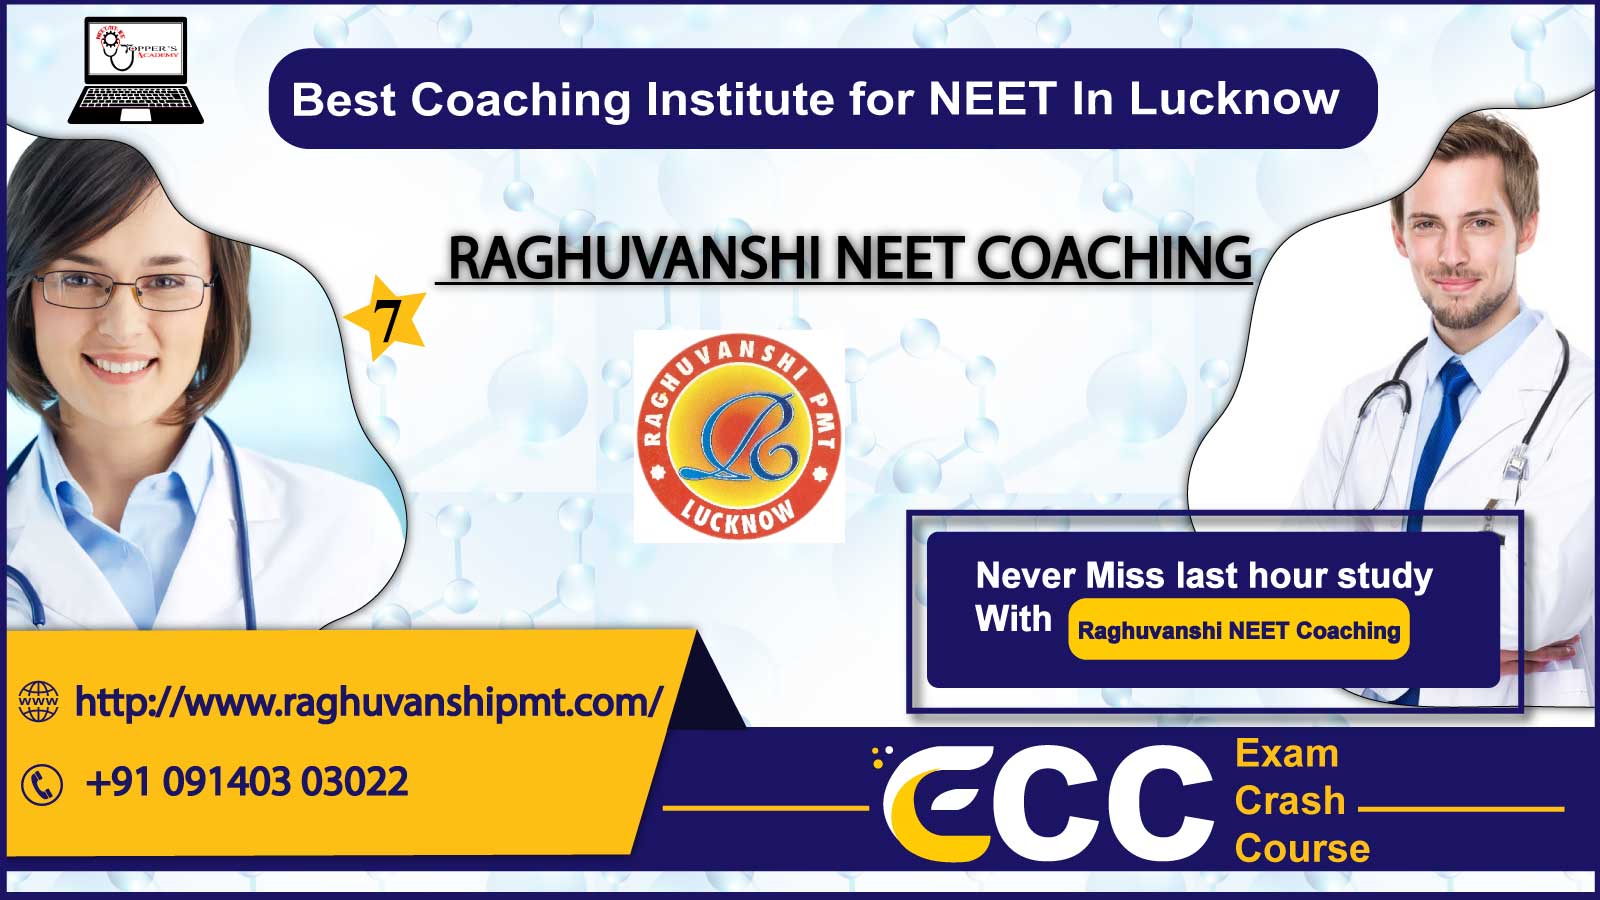 Raghuvanshi NEET Coaching in Lucknow